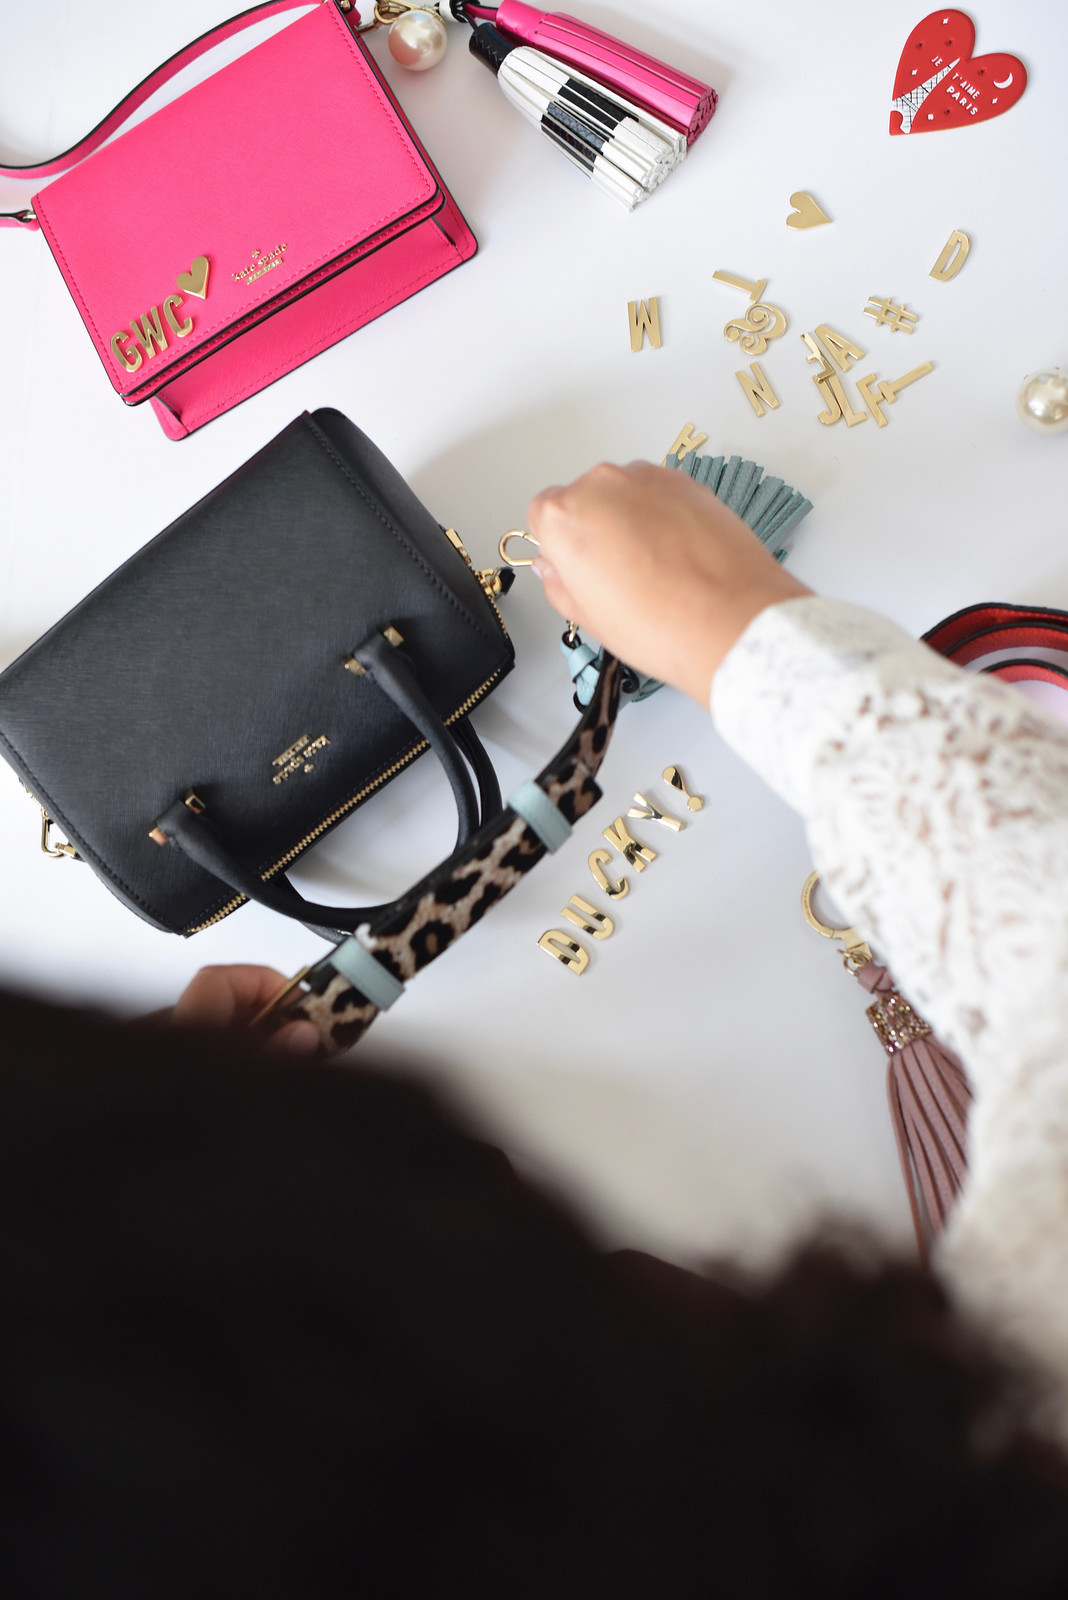 Girl With Curves blogger Tanesha Awasthi personalizes kate spade new york handbags.